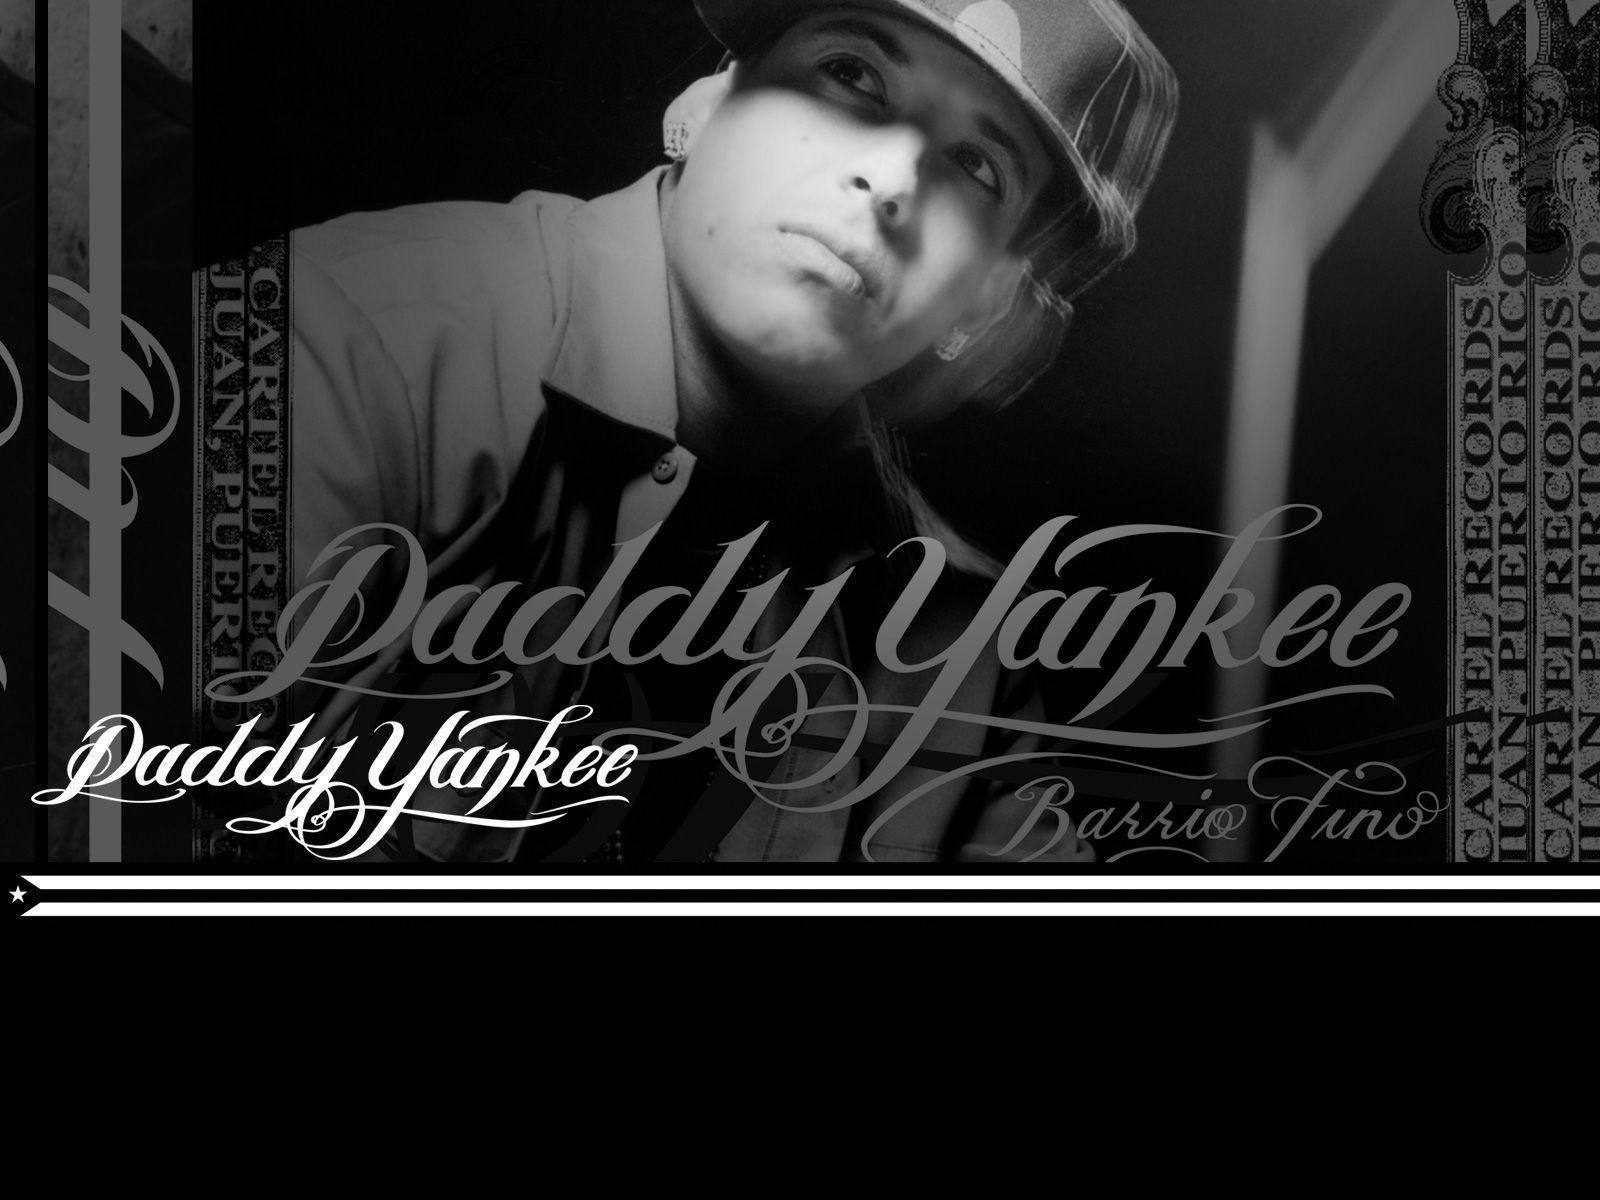 Hd Daddy Yankee Wallpaper Database Yankees Wallpaper Hd  Fans Share